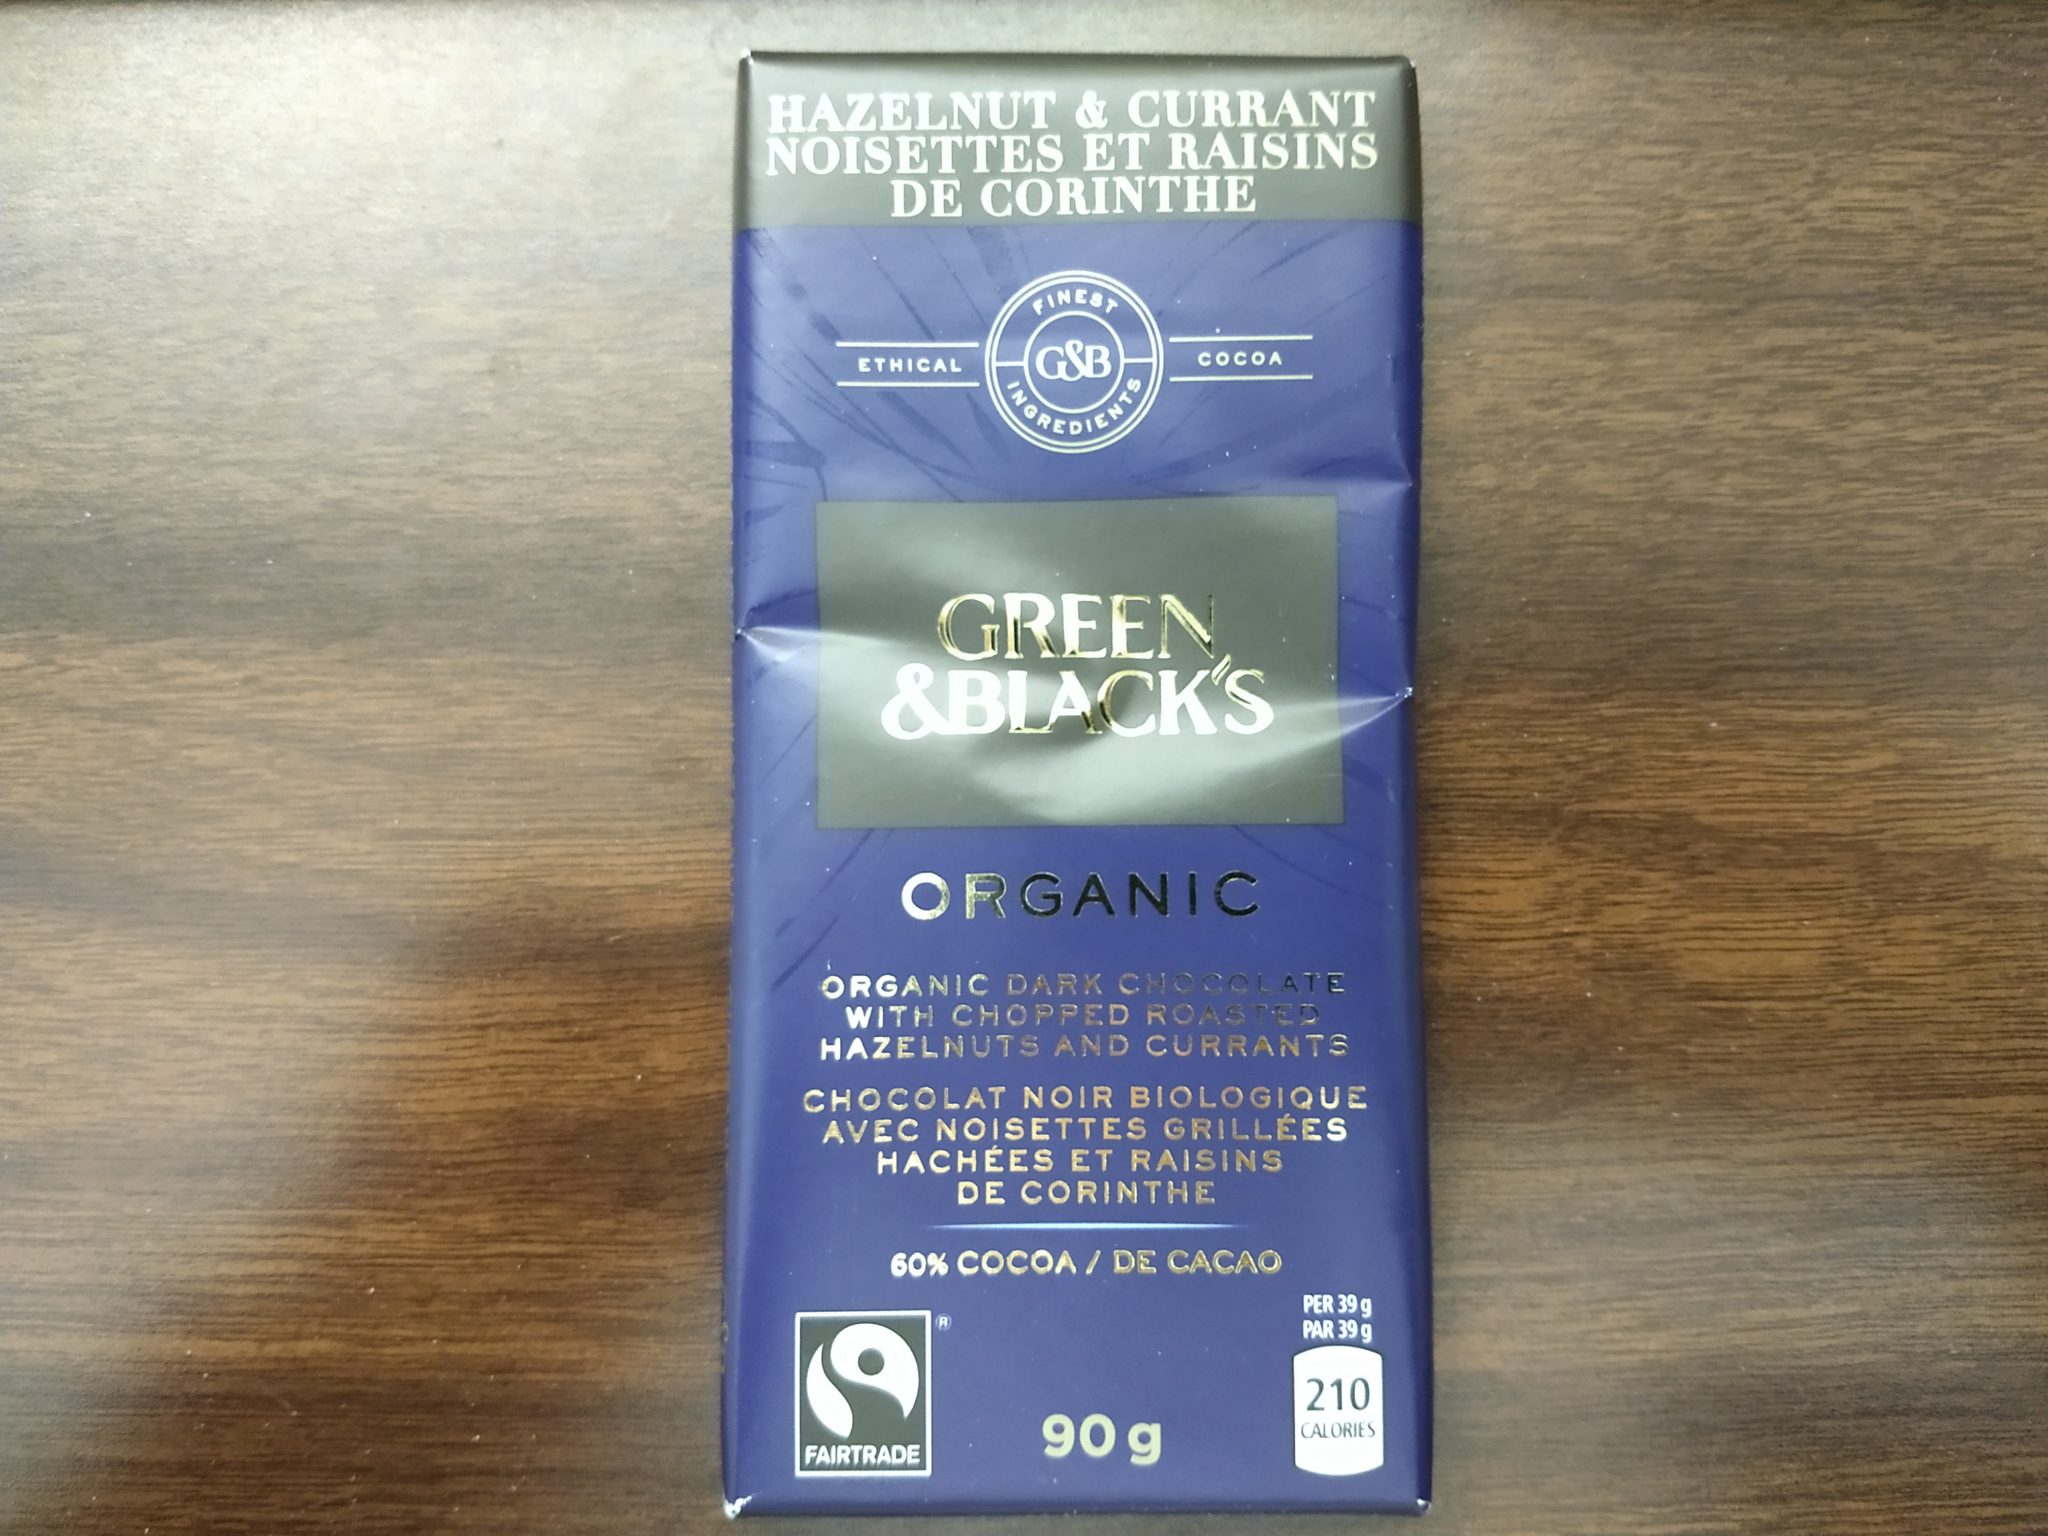 Green & Black’s – Organic Dark Chocolate with Hazelnuts and Currants